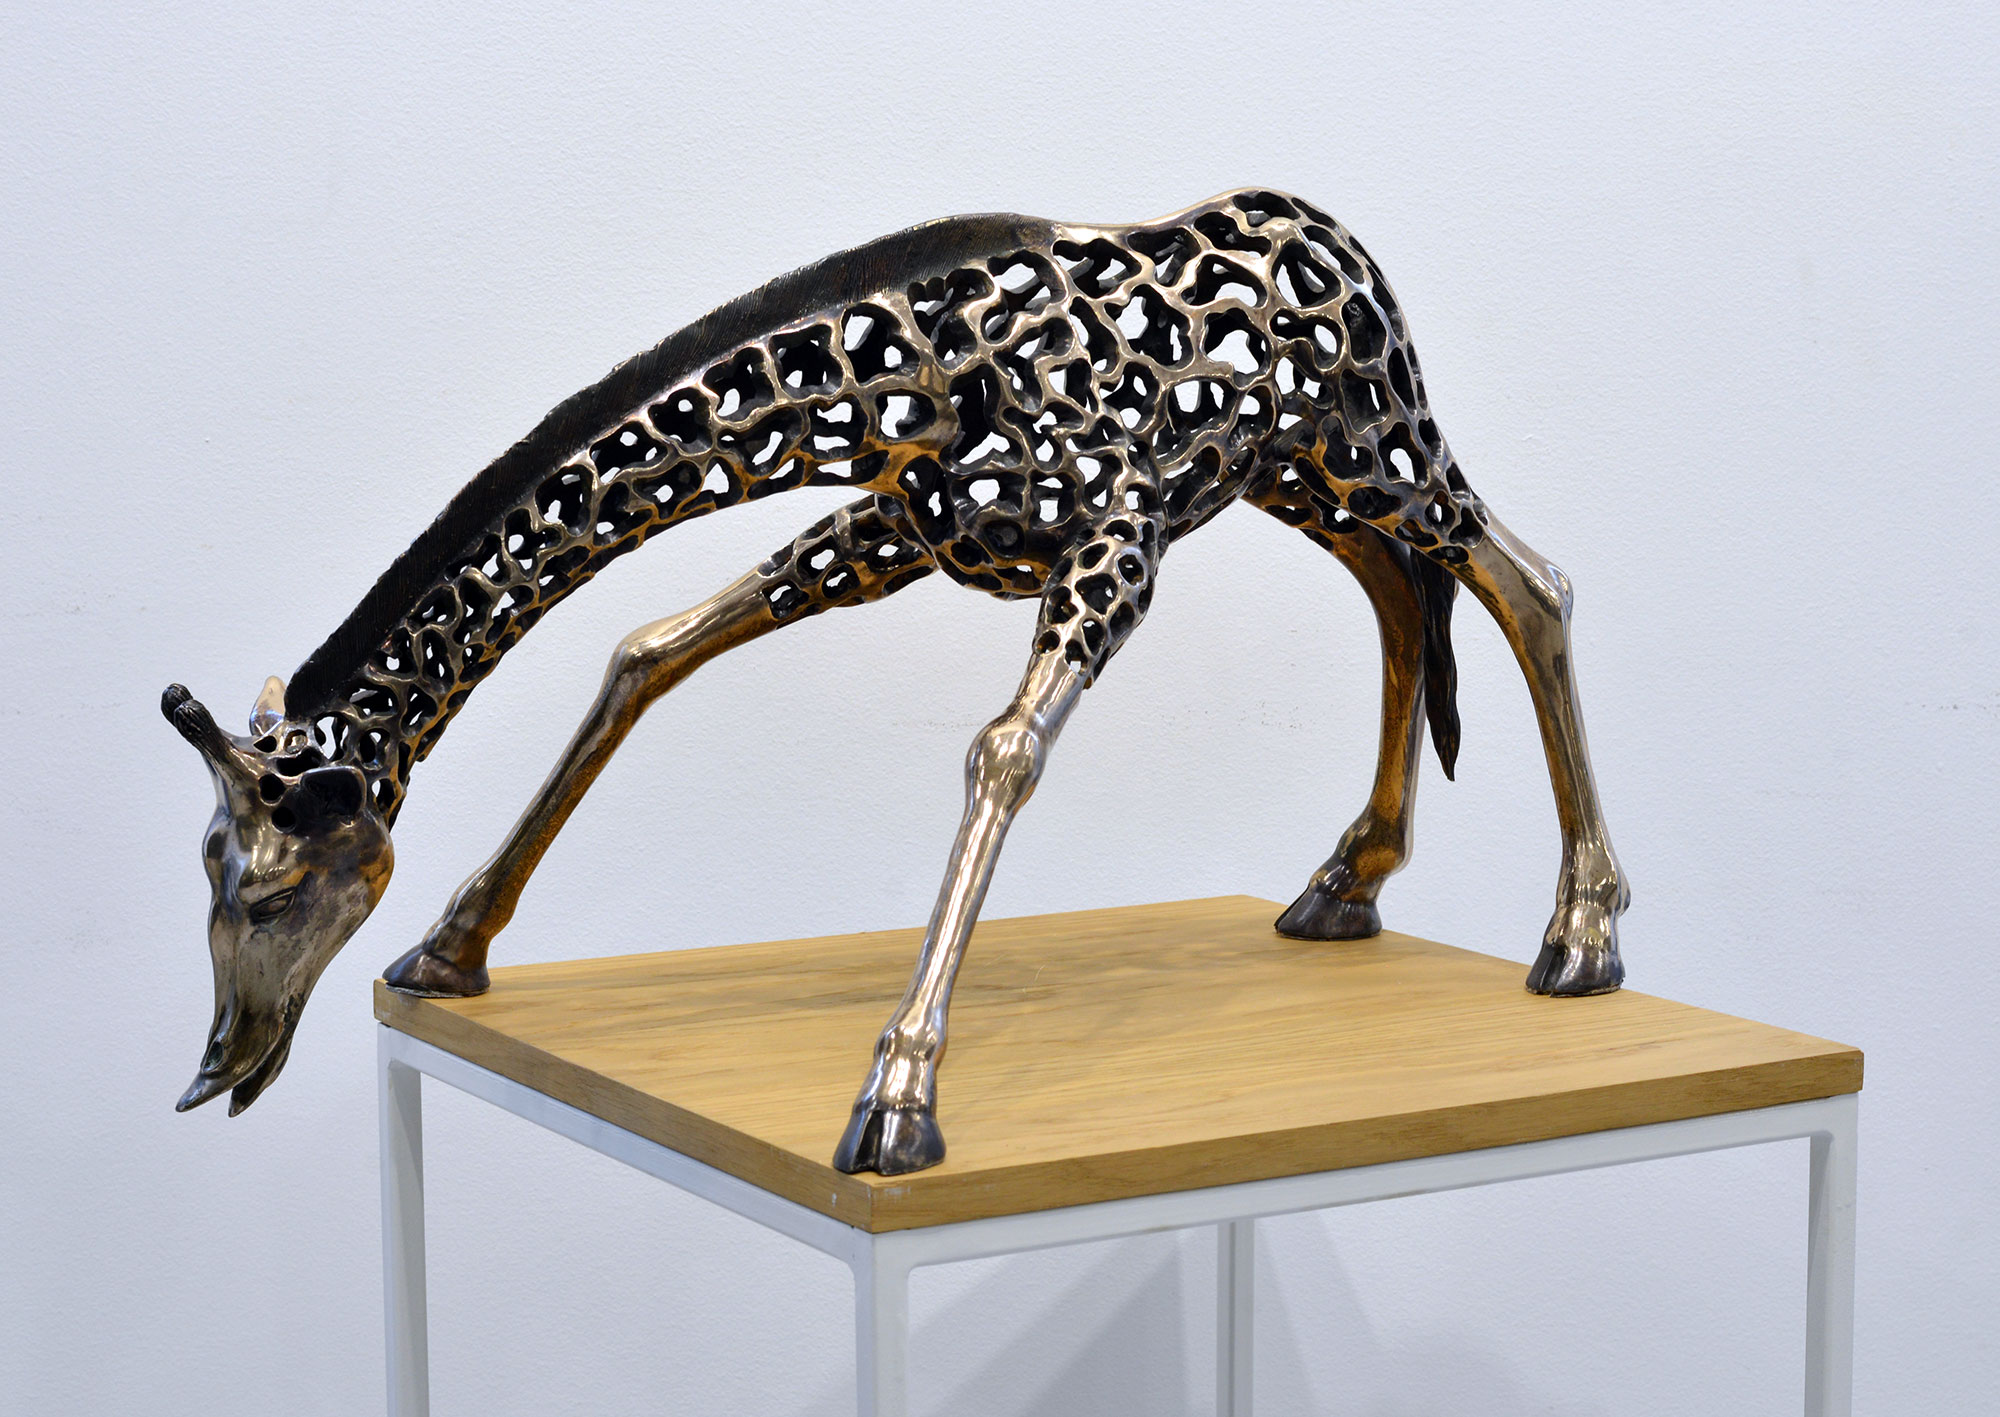 "Giraffe", 2000 - 6